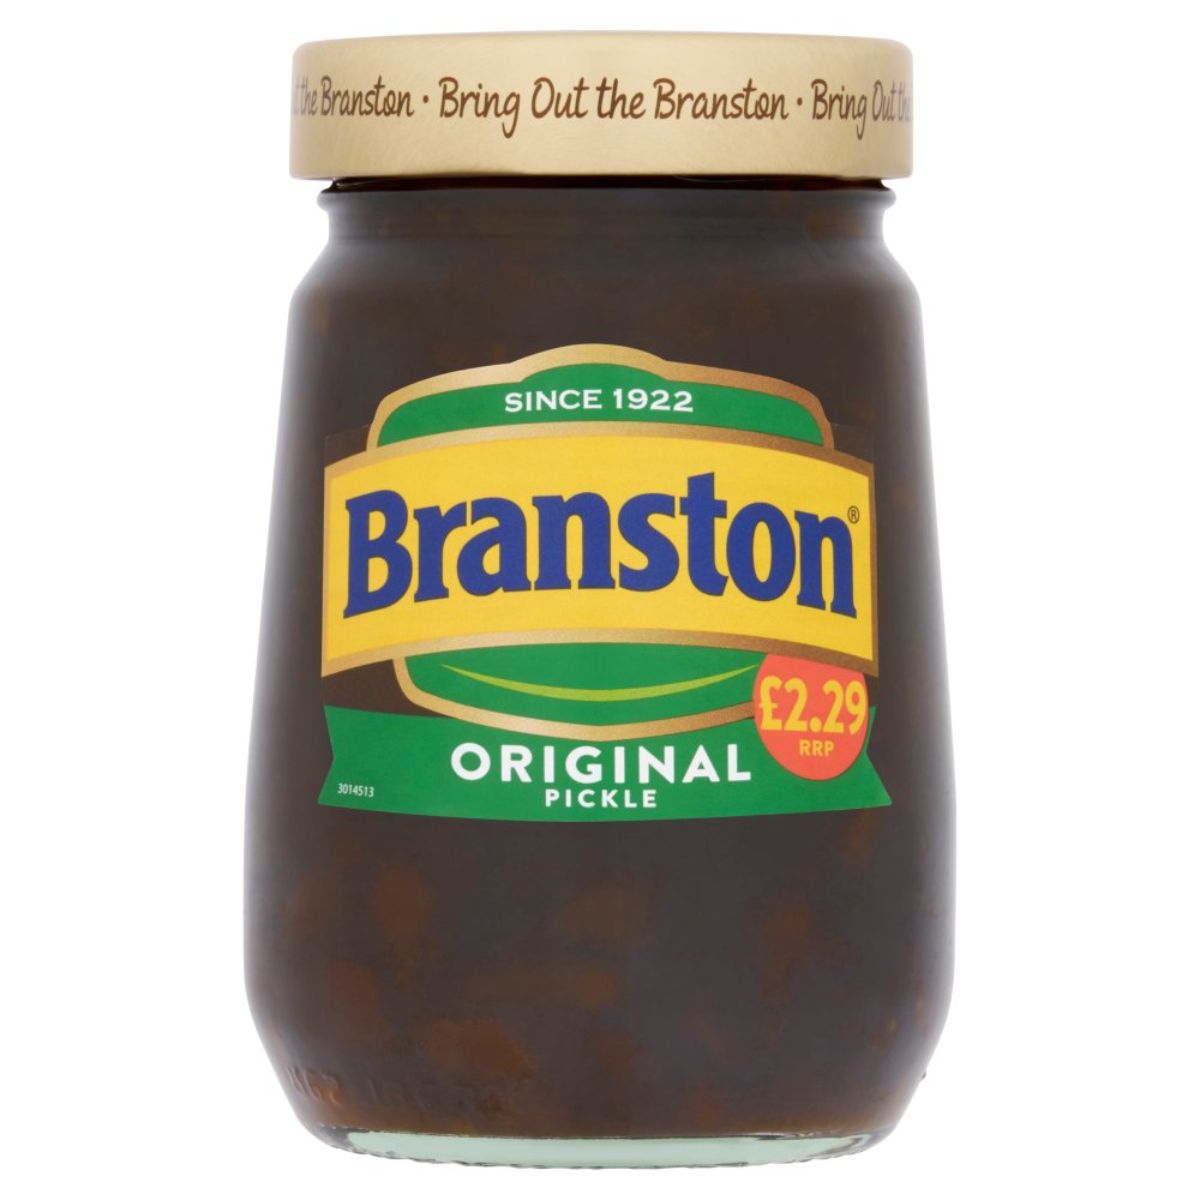 A jar of Branston - Original Pickle - 360g on a white background.